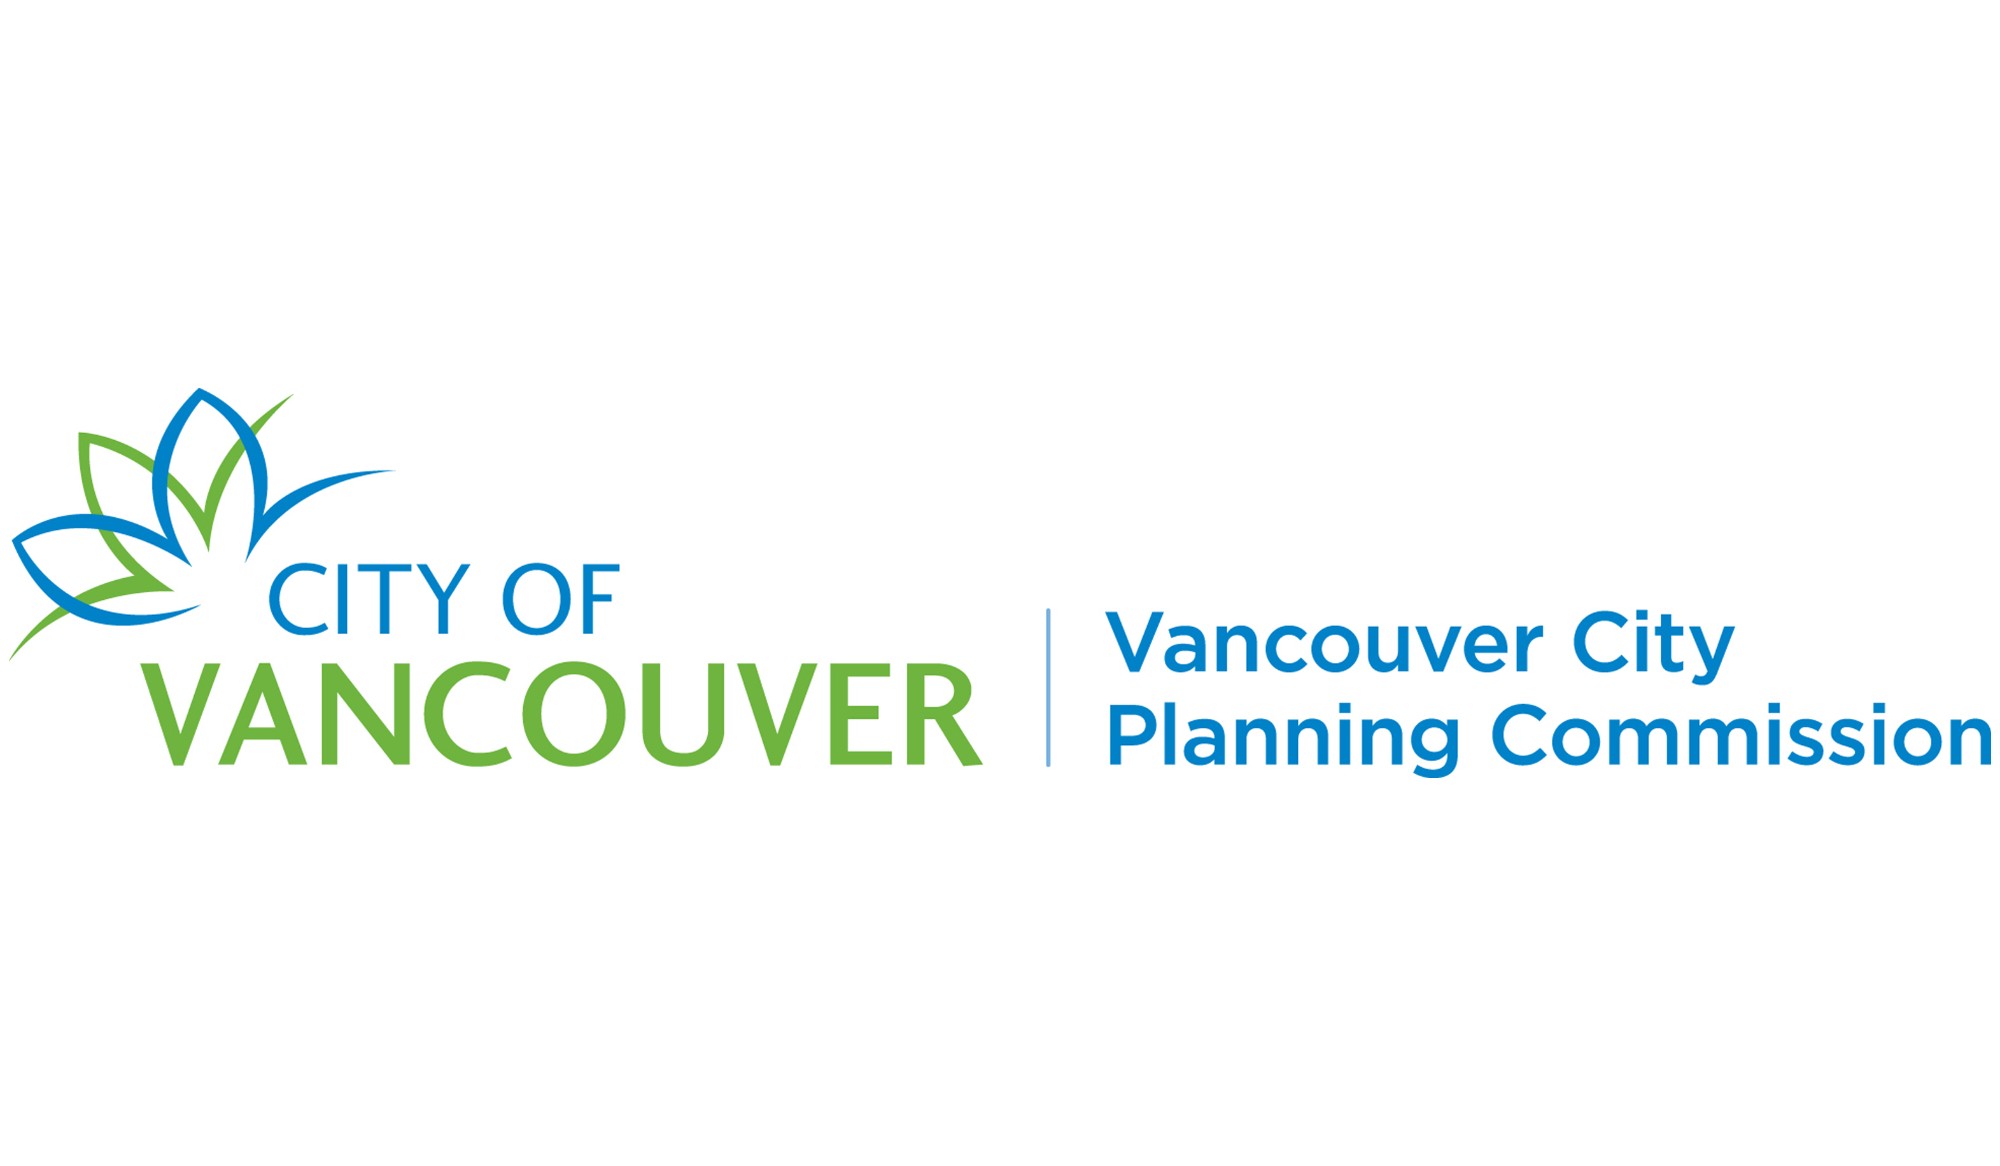 City of Vancouver logo